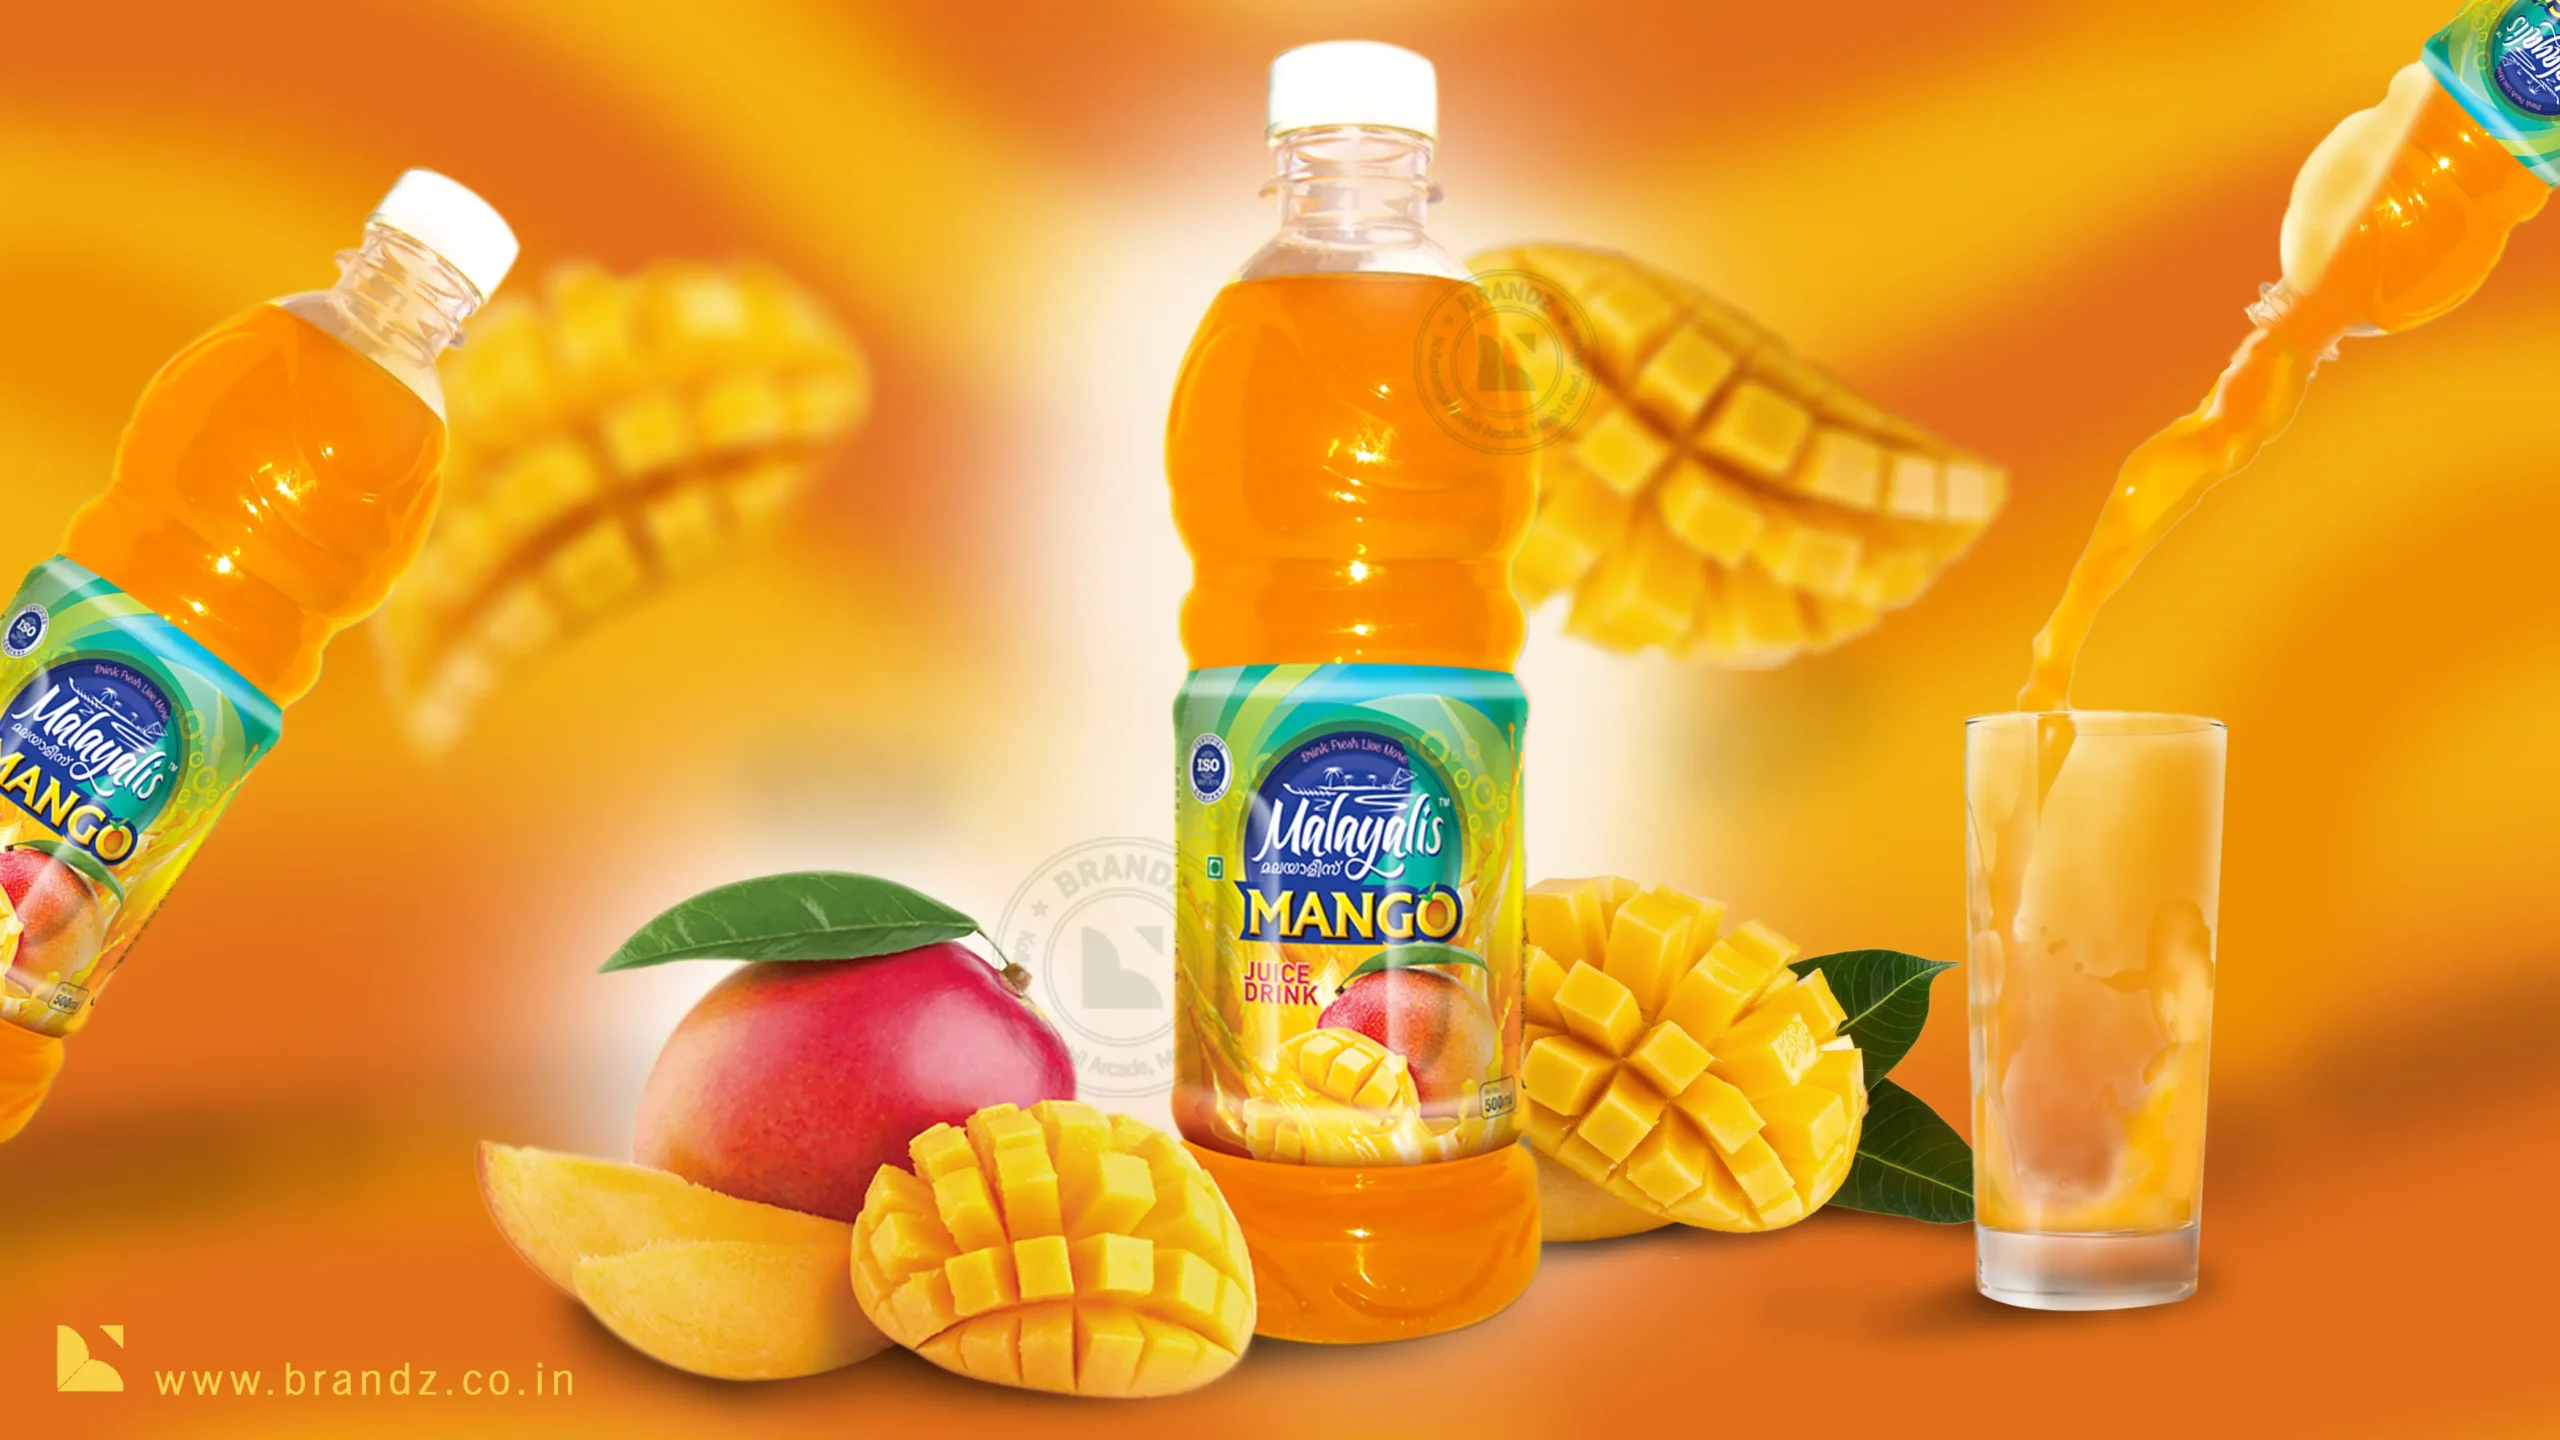 Malayalis Mango Juice Drink Label